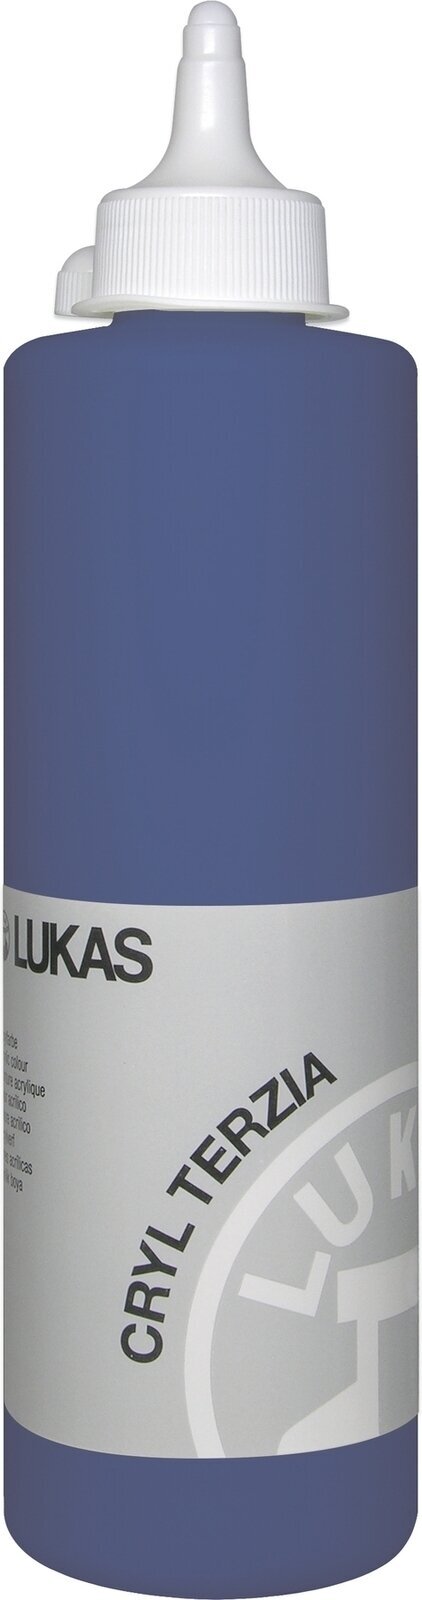 Acrylic Paint Lukas Cryl Terzia Acrylic Paint Plastic Bottle Acrylic Paint Cobalt Blue Hue 500 ml 1 pc